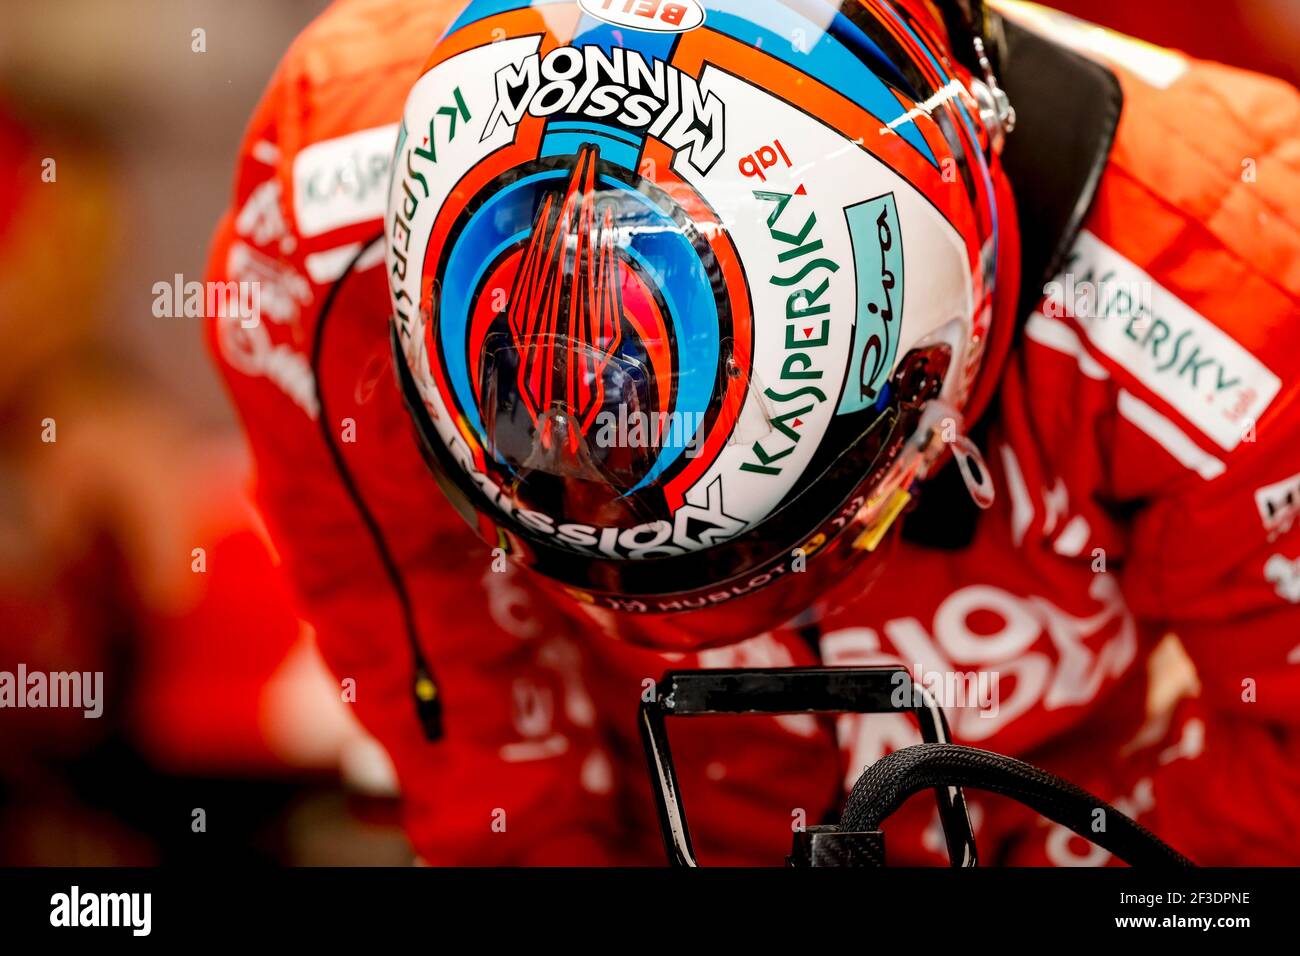 RAIKKONEN Kimi (fin), Scuderia Ferrari SF71H, portrait helmet, casque,  during the 2018 Formula One World Championship, Abu Dhabi Grand Prix from  November 22 to 25 in Yas Marina - Photo DPPI Stock Photo - Alamy